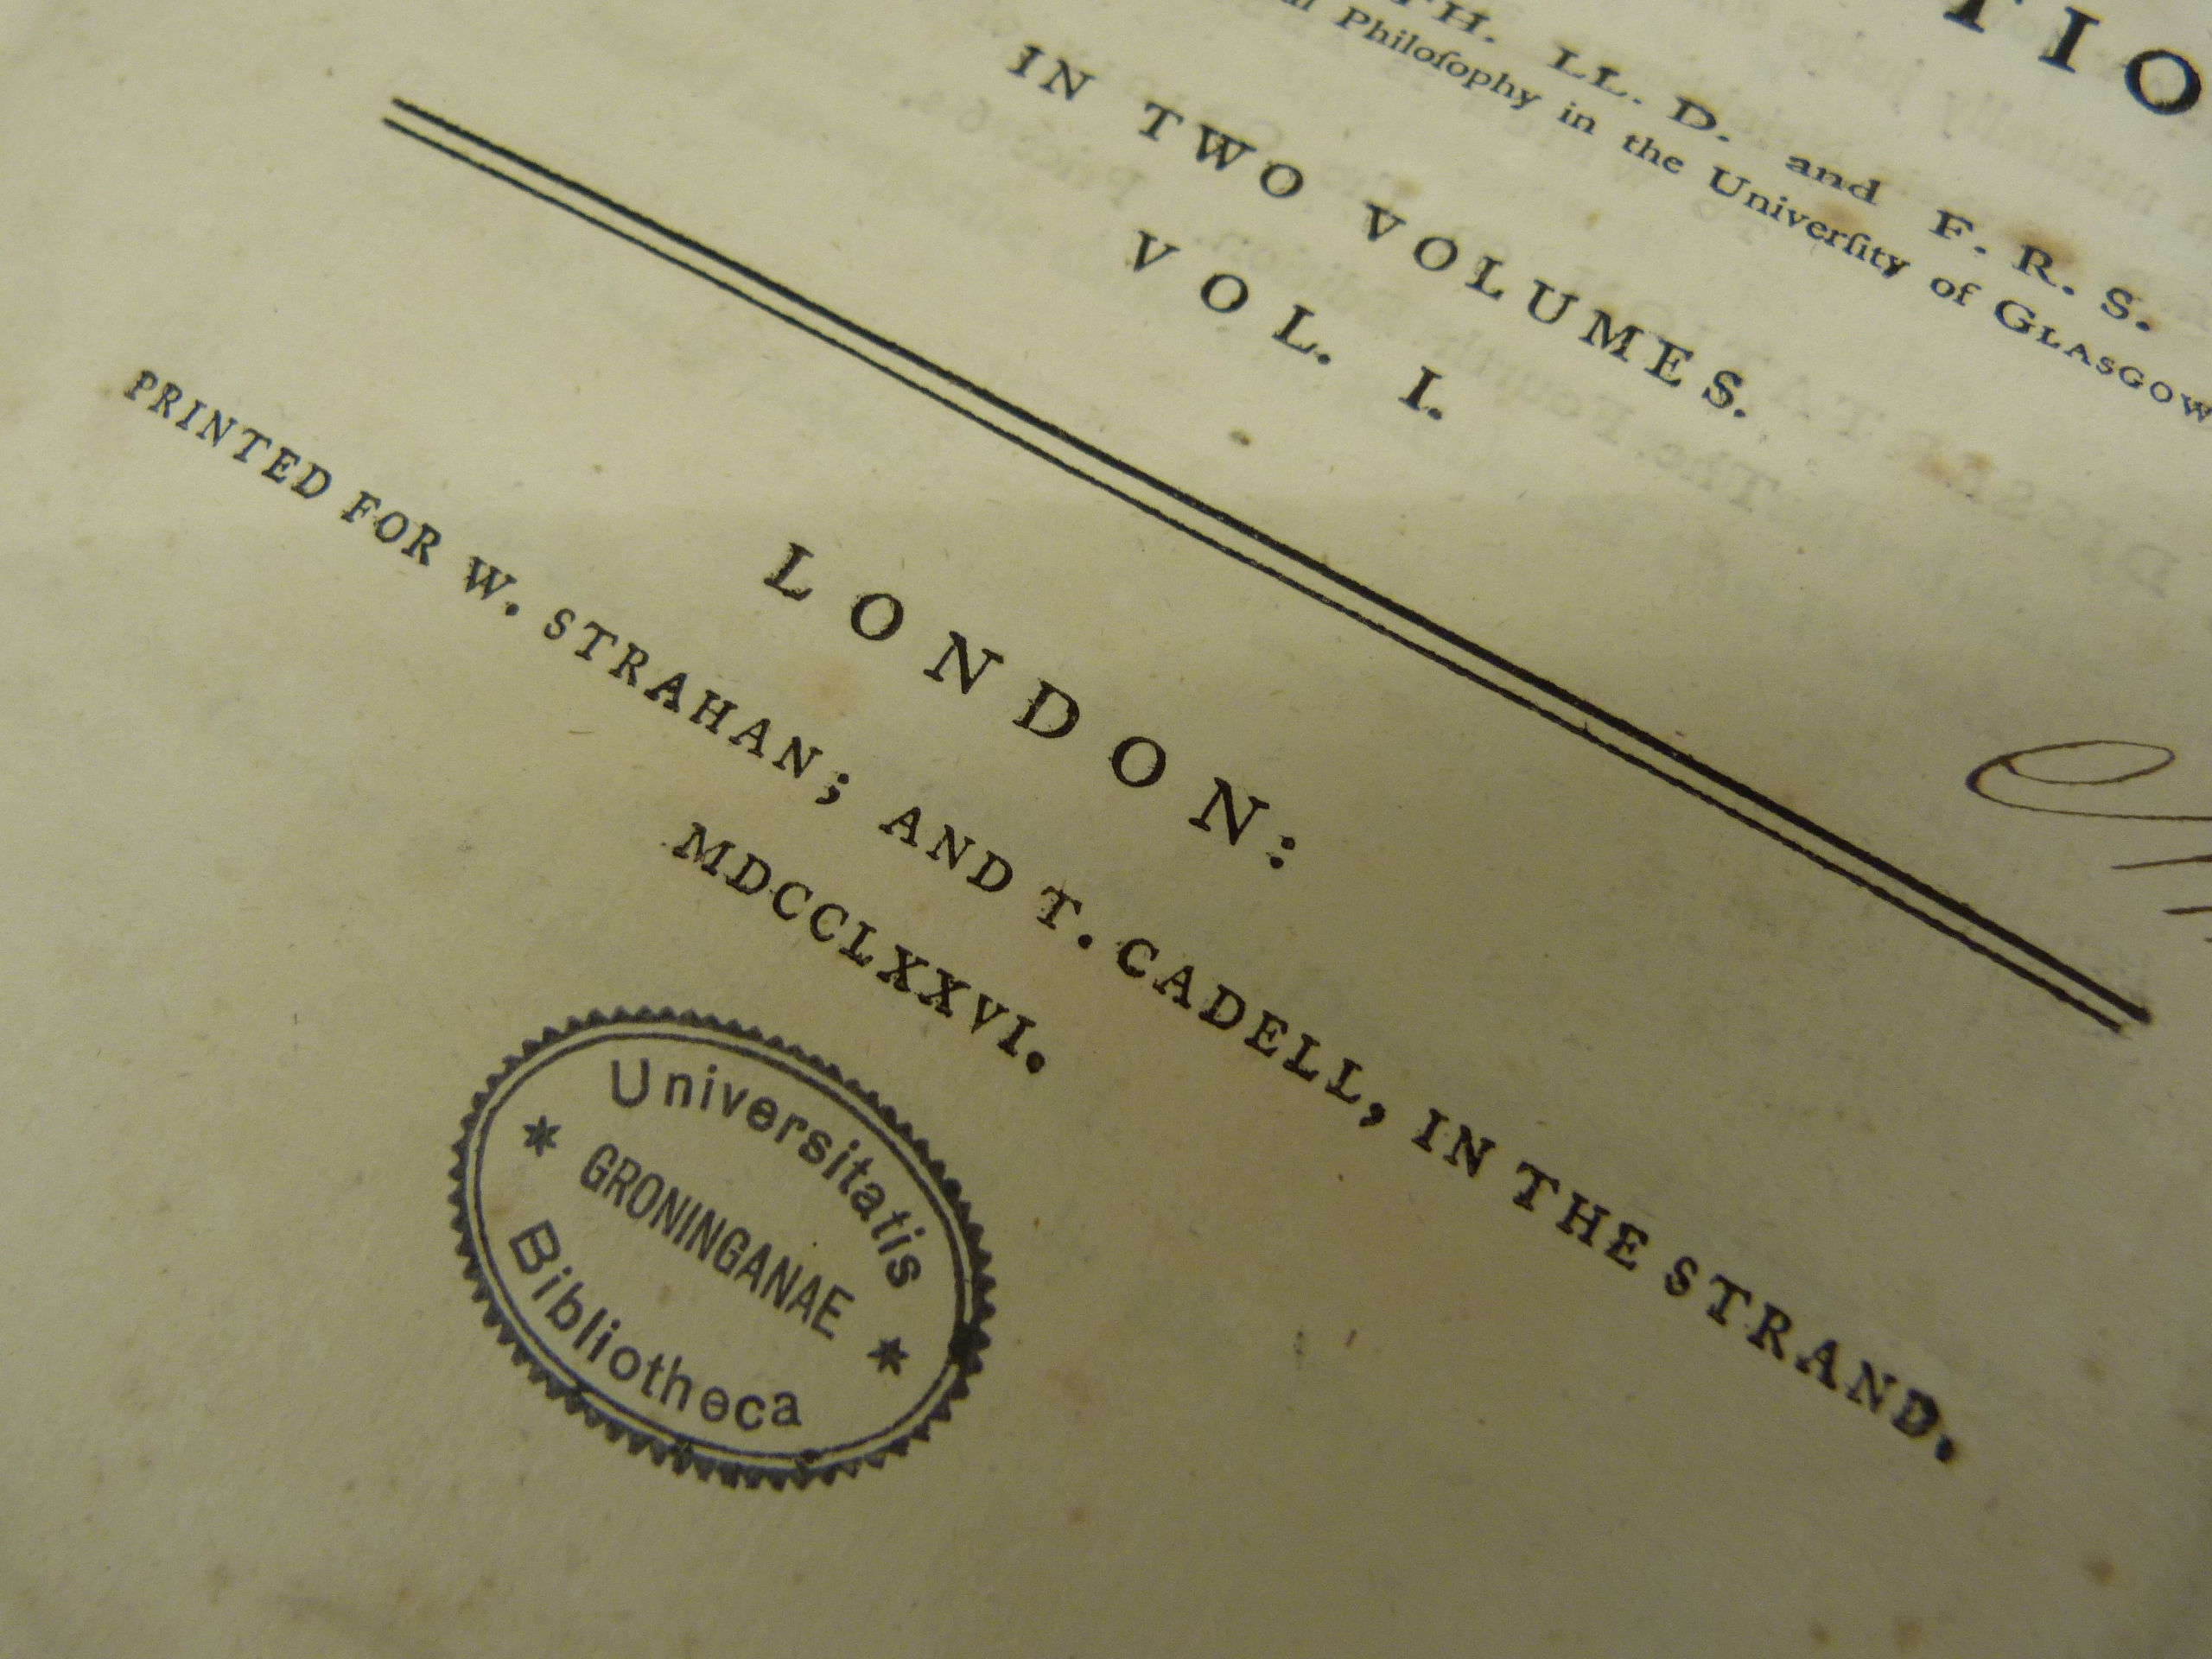 London, 1776London, 1776